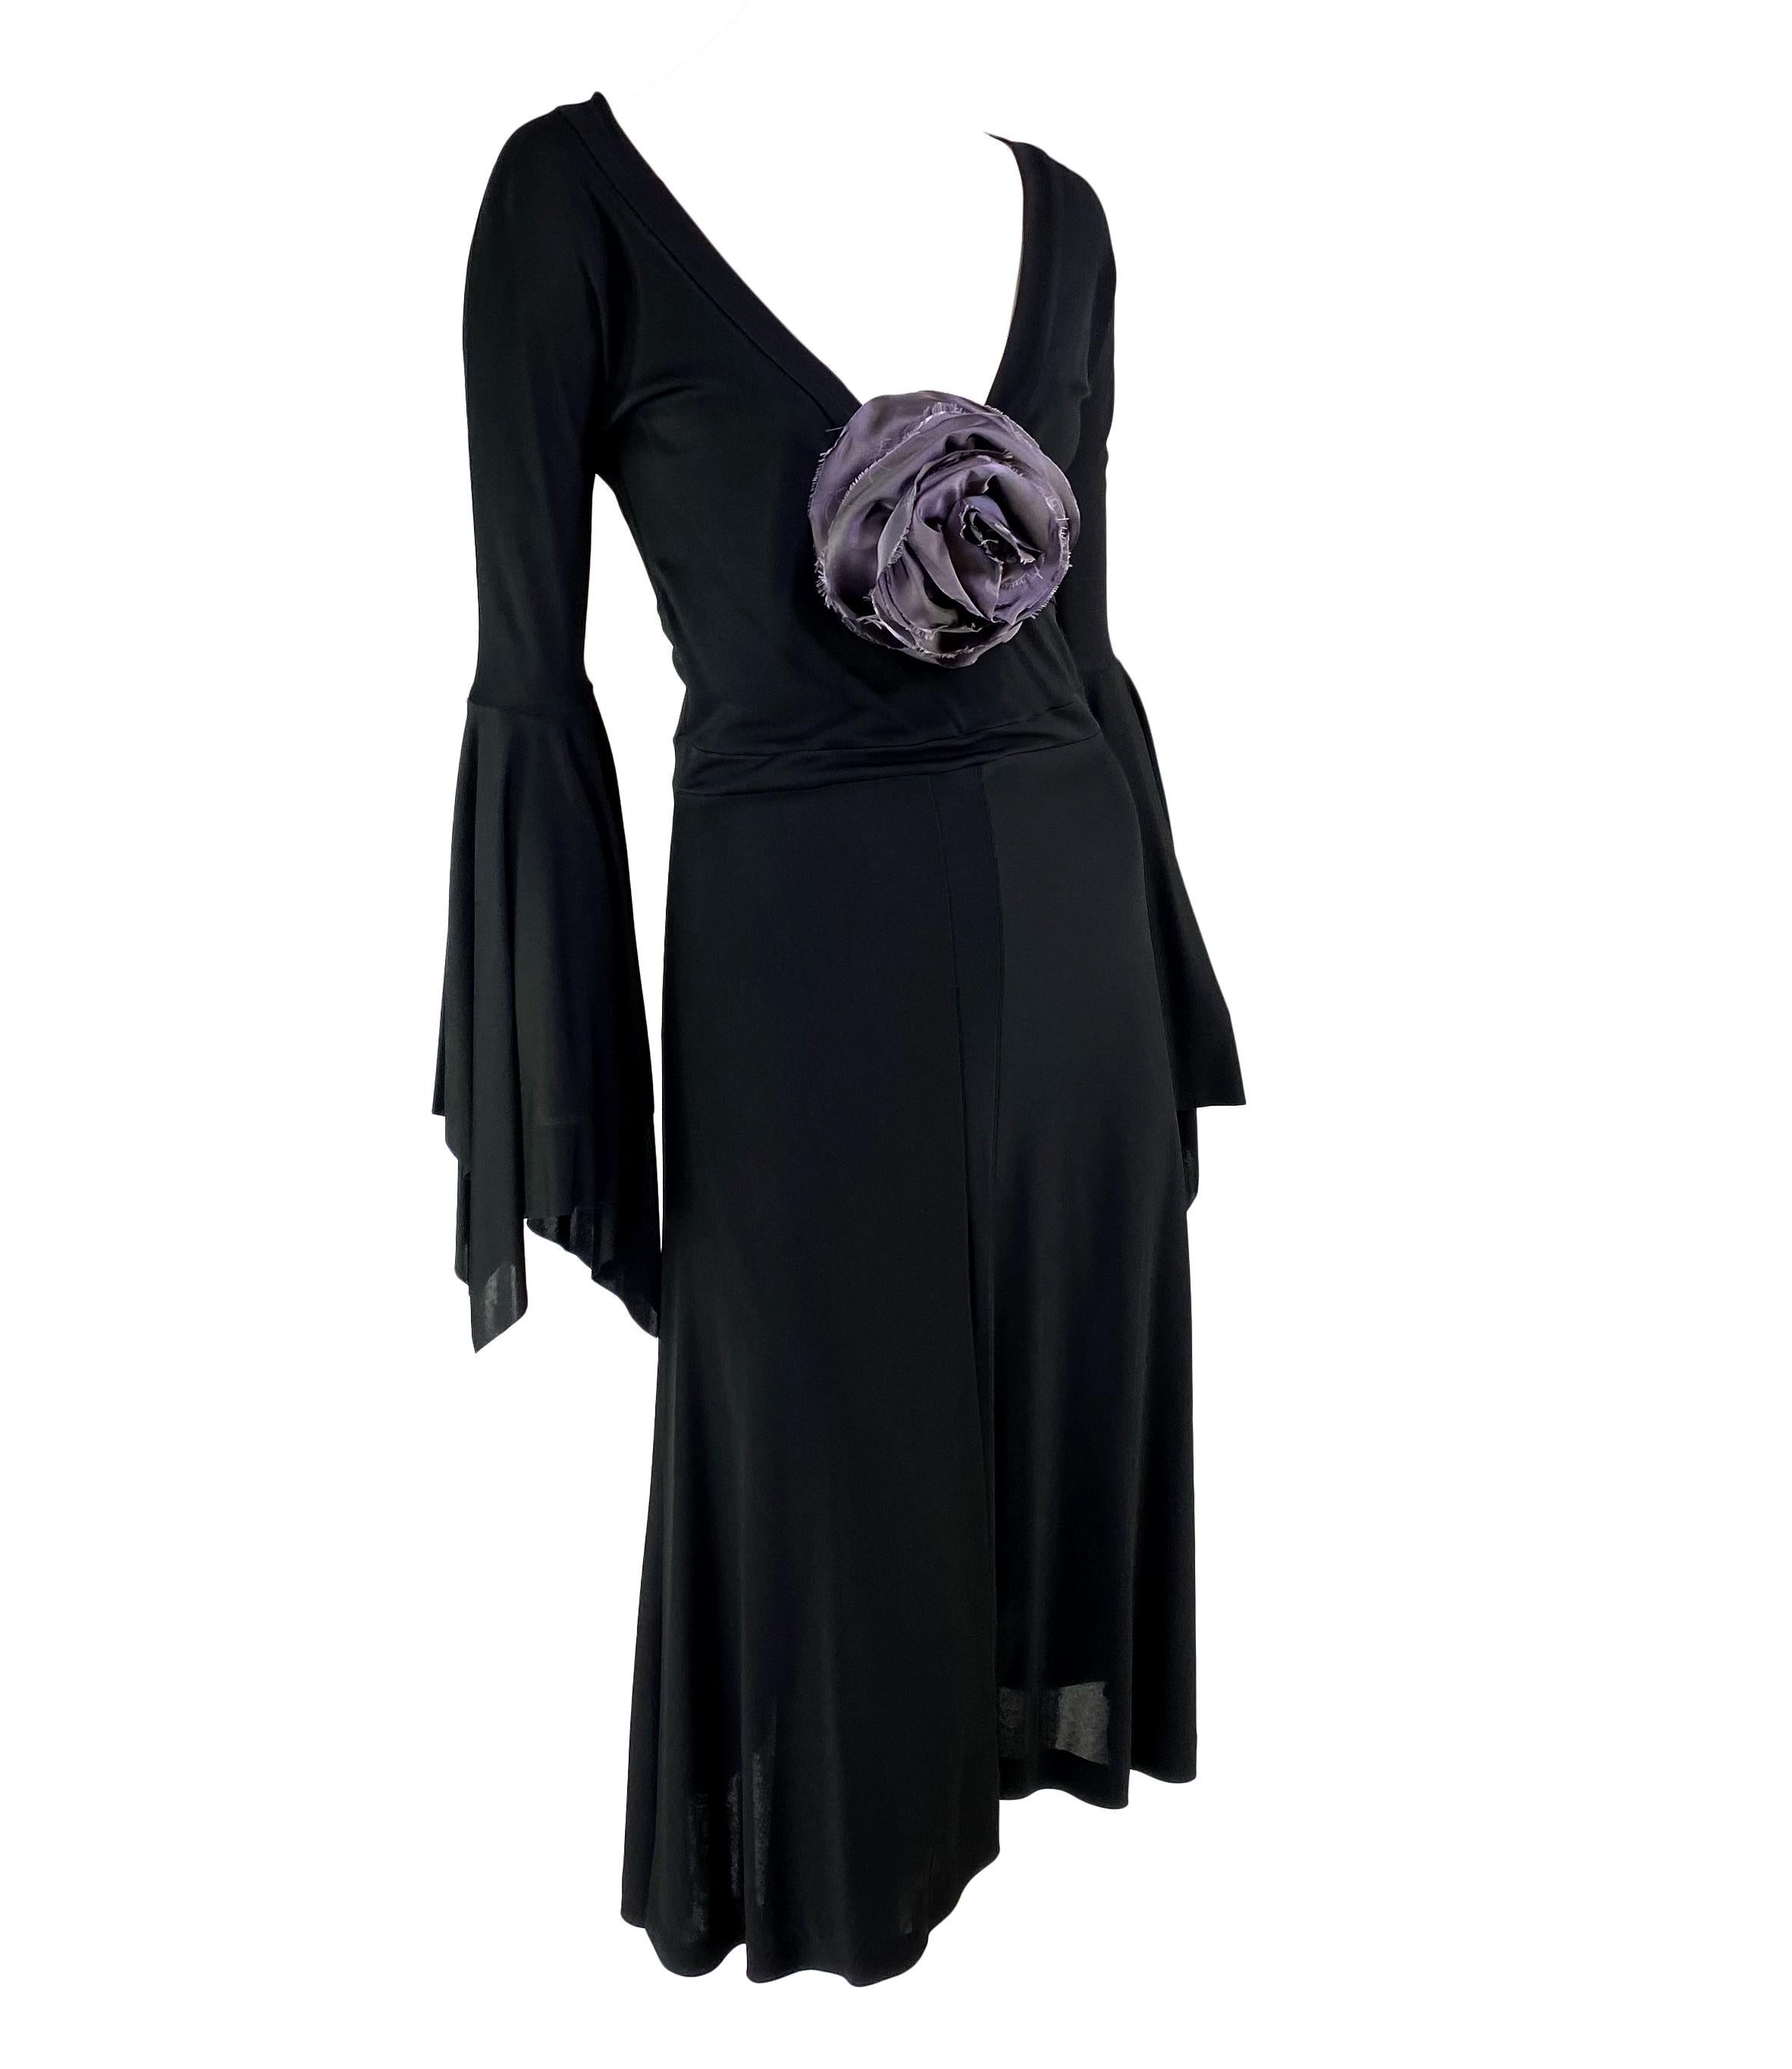 Women's S/S 2003 Yves Saint Laurent by Tom Ford Black Floral Applique Runway Dress For Sale